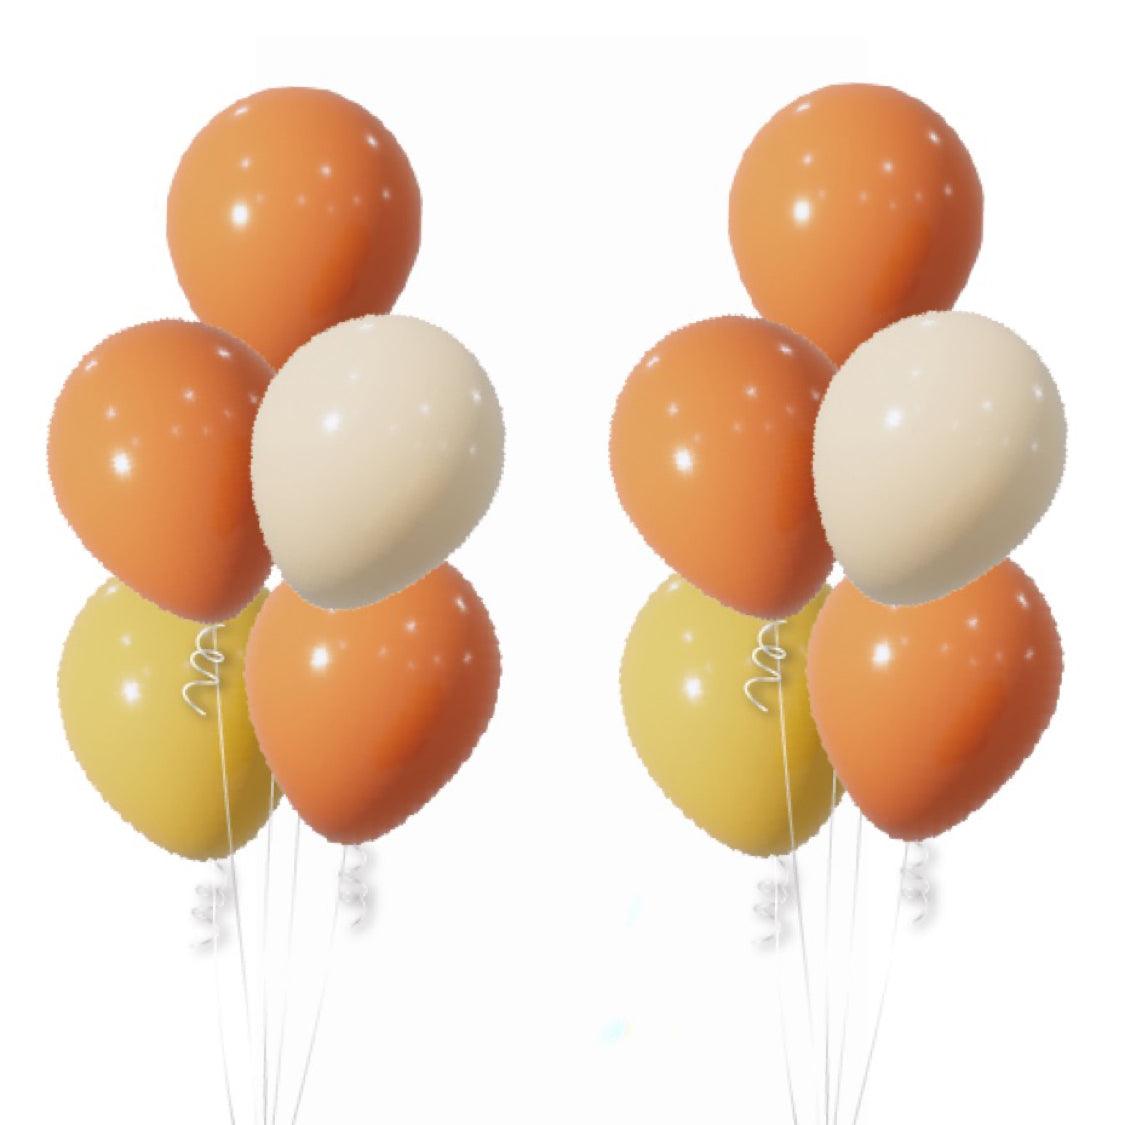 Mustard Orange Splash helium filled latex balloon 2 bouquets of 5 - ONE UP BALLOONS